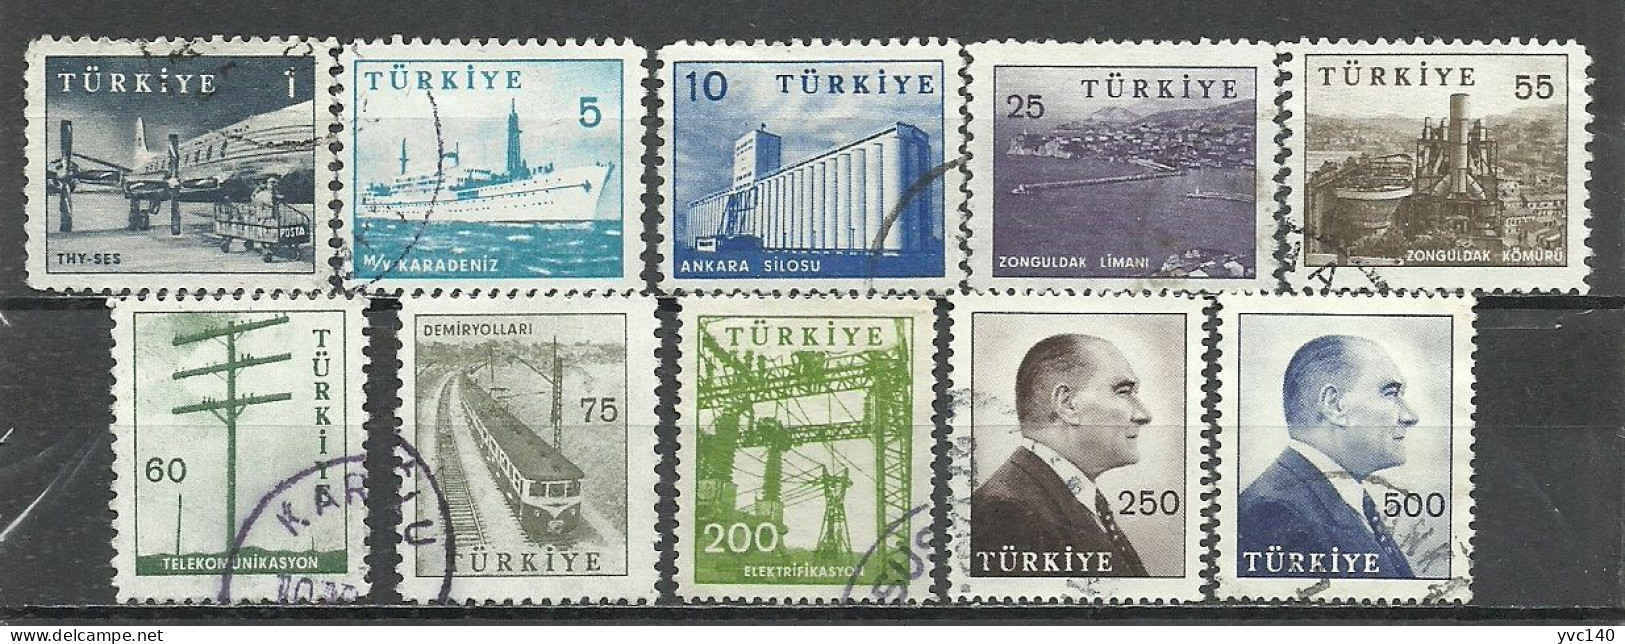 Turkey; 1959 Pictorial Postage Stamps (Complete Set) - Usati